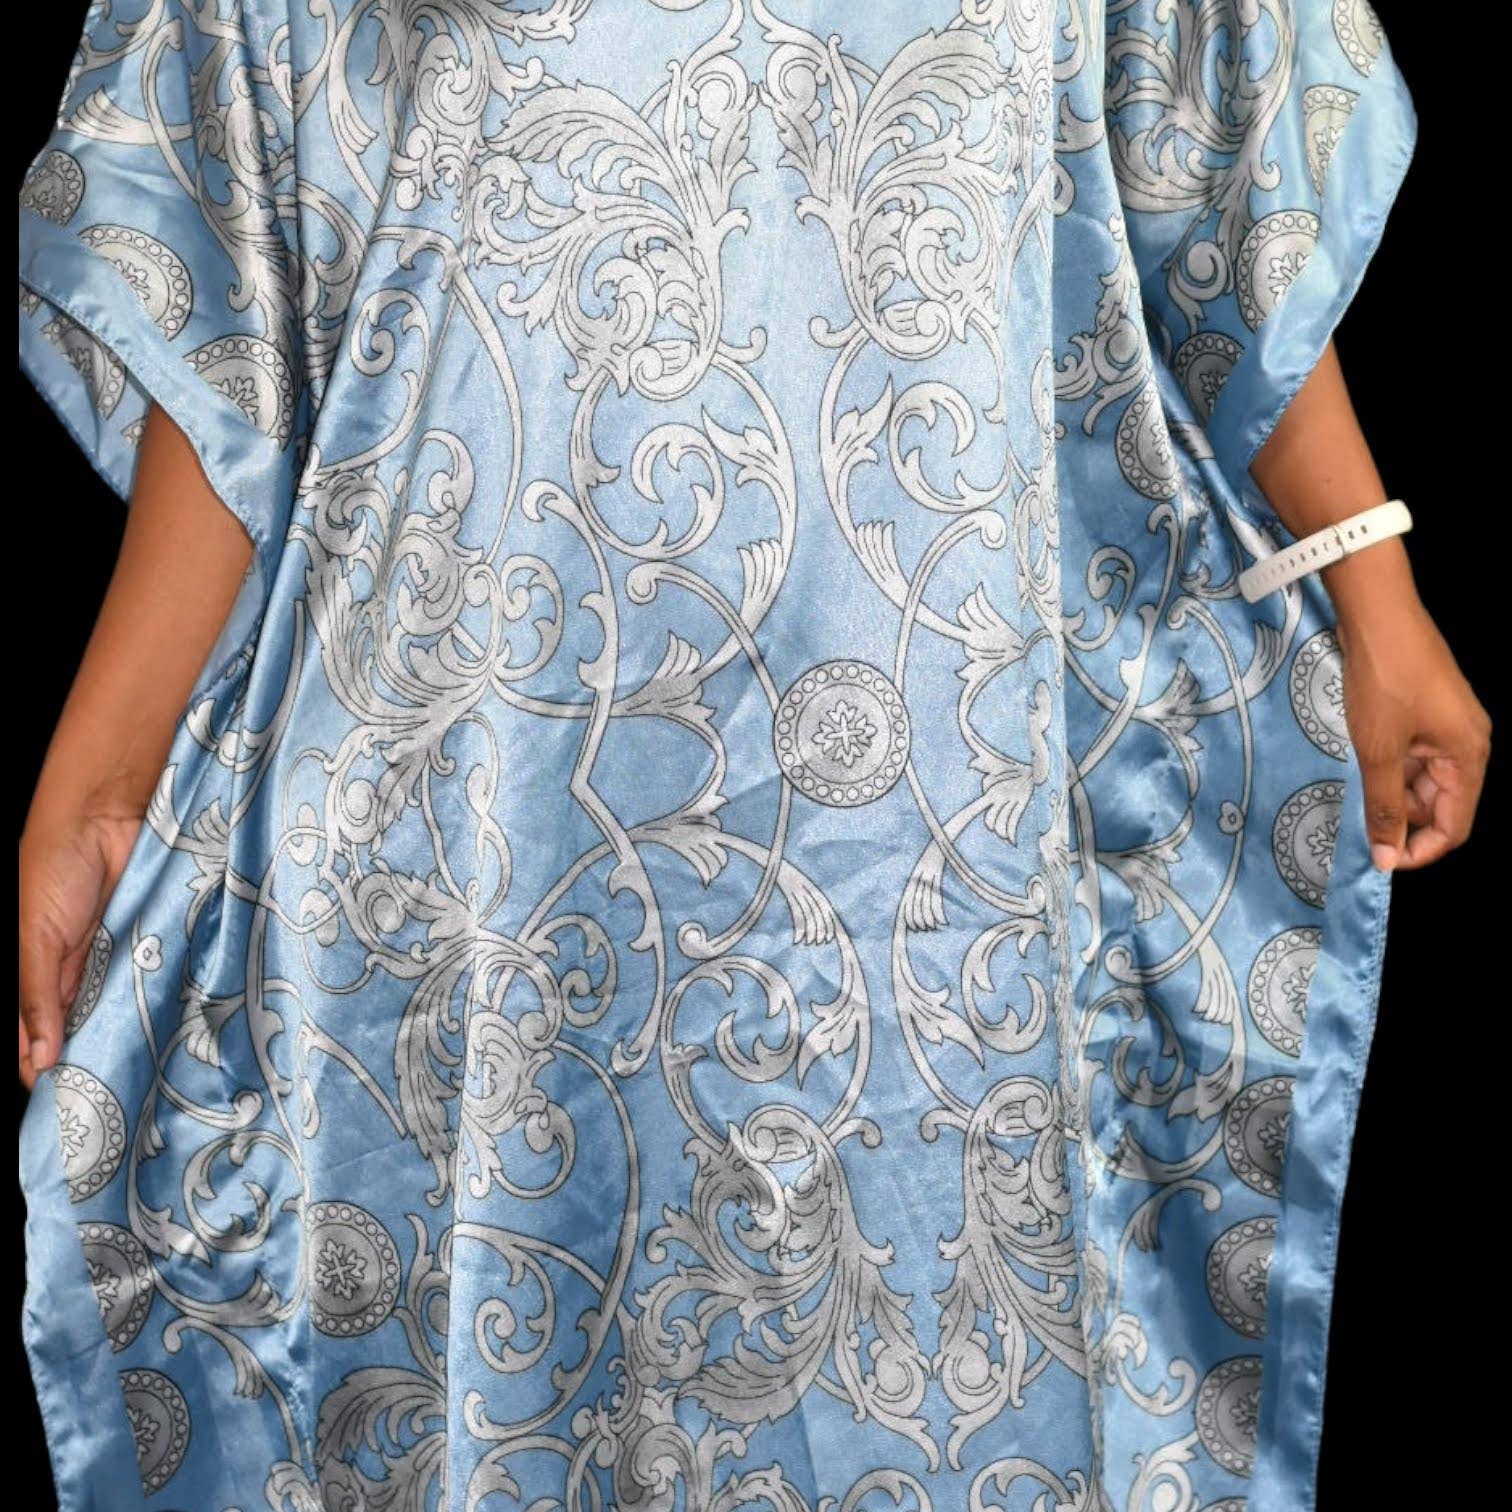 Midnight Velvet Caftan Dress Blue Silver Baroque Silky Muumuu One Size S M L